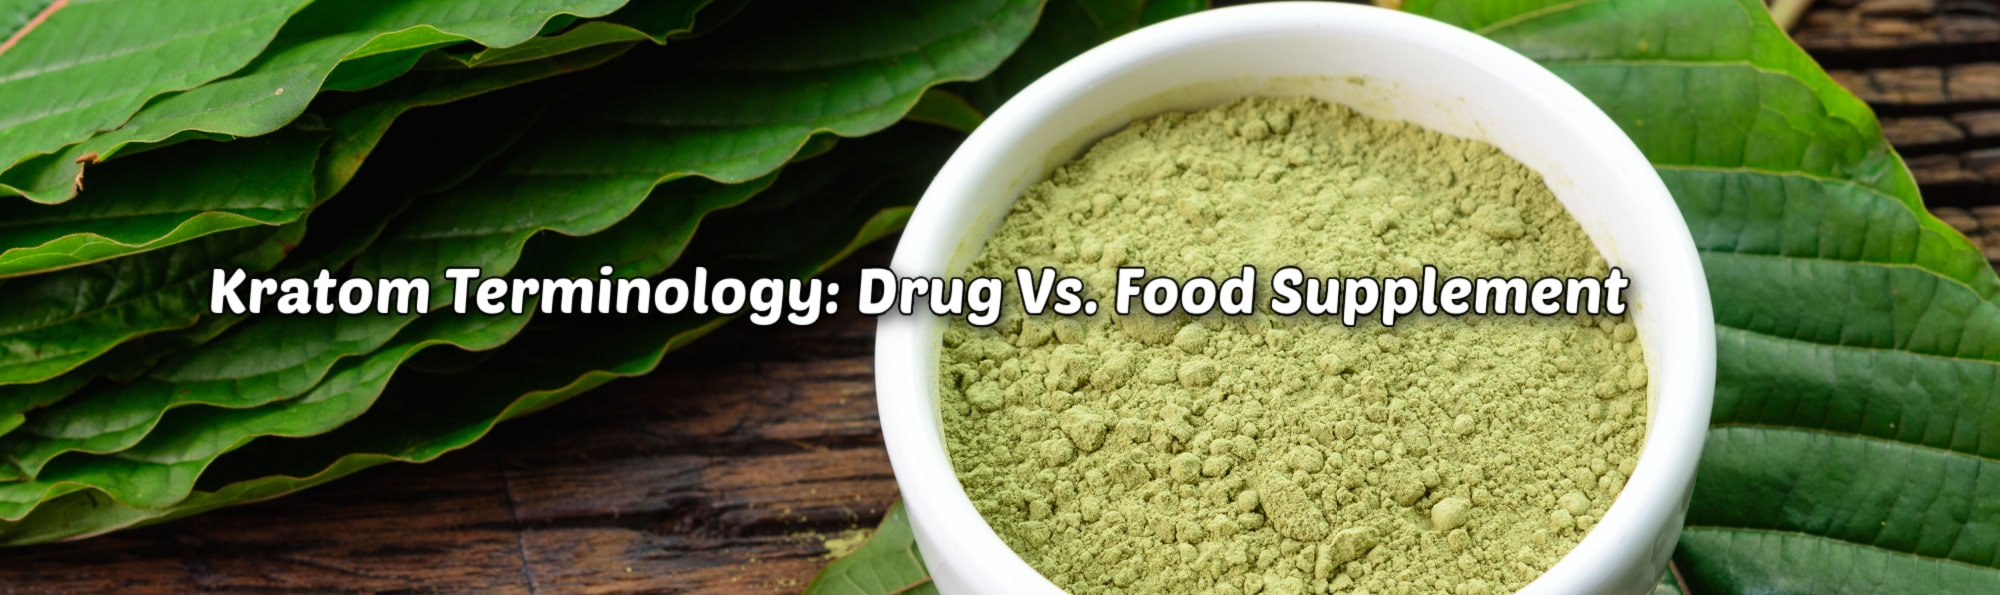 image of kratom terminology drug vs food supplement